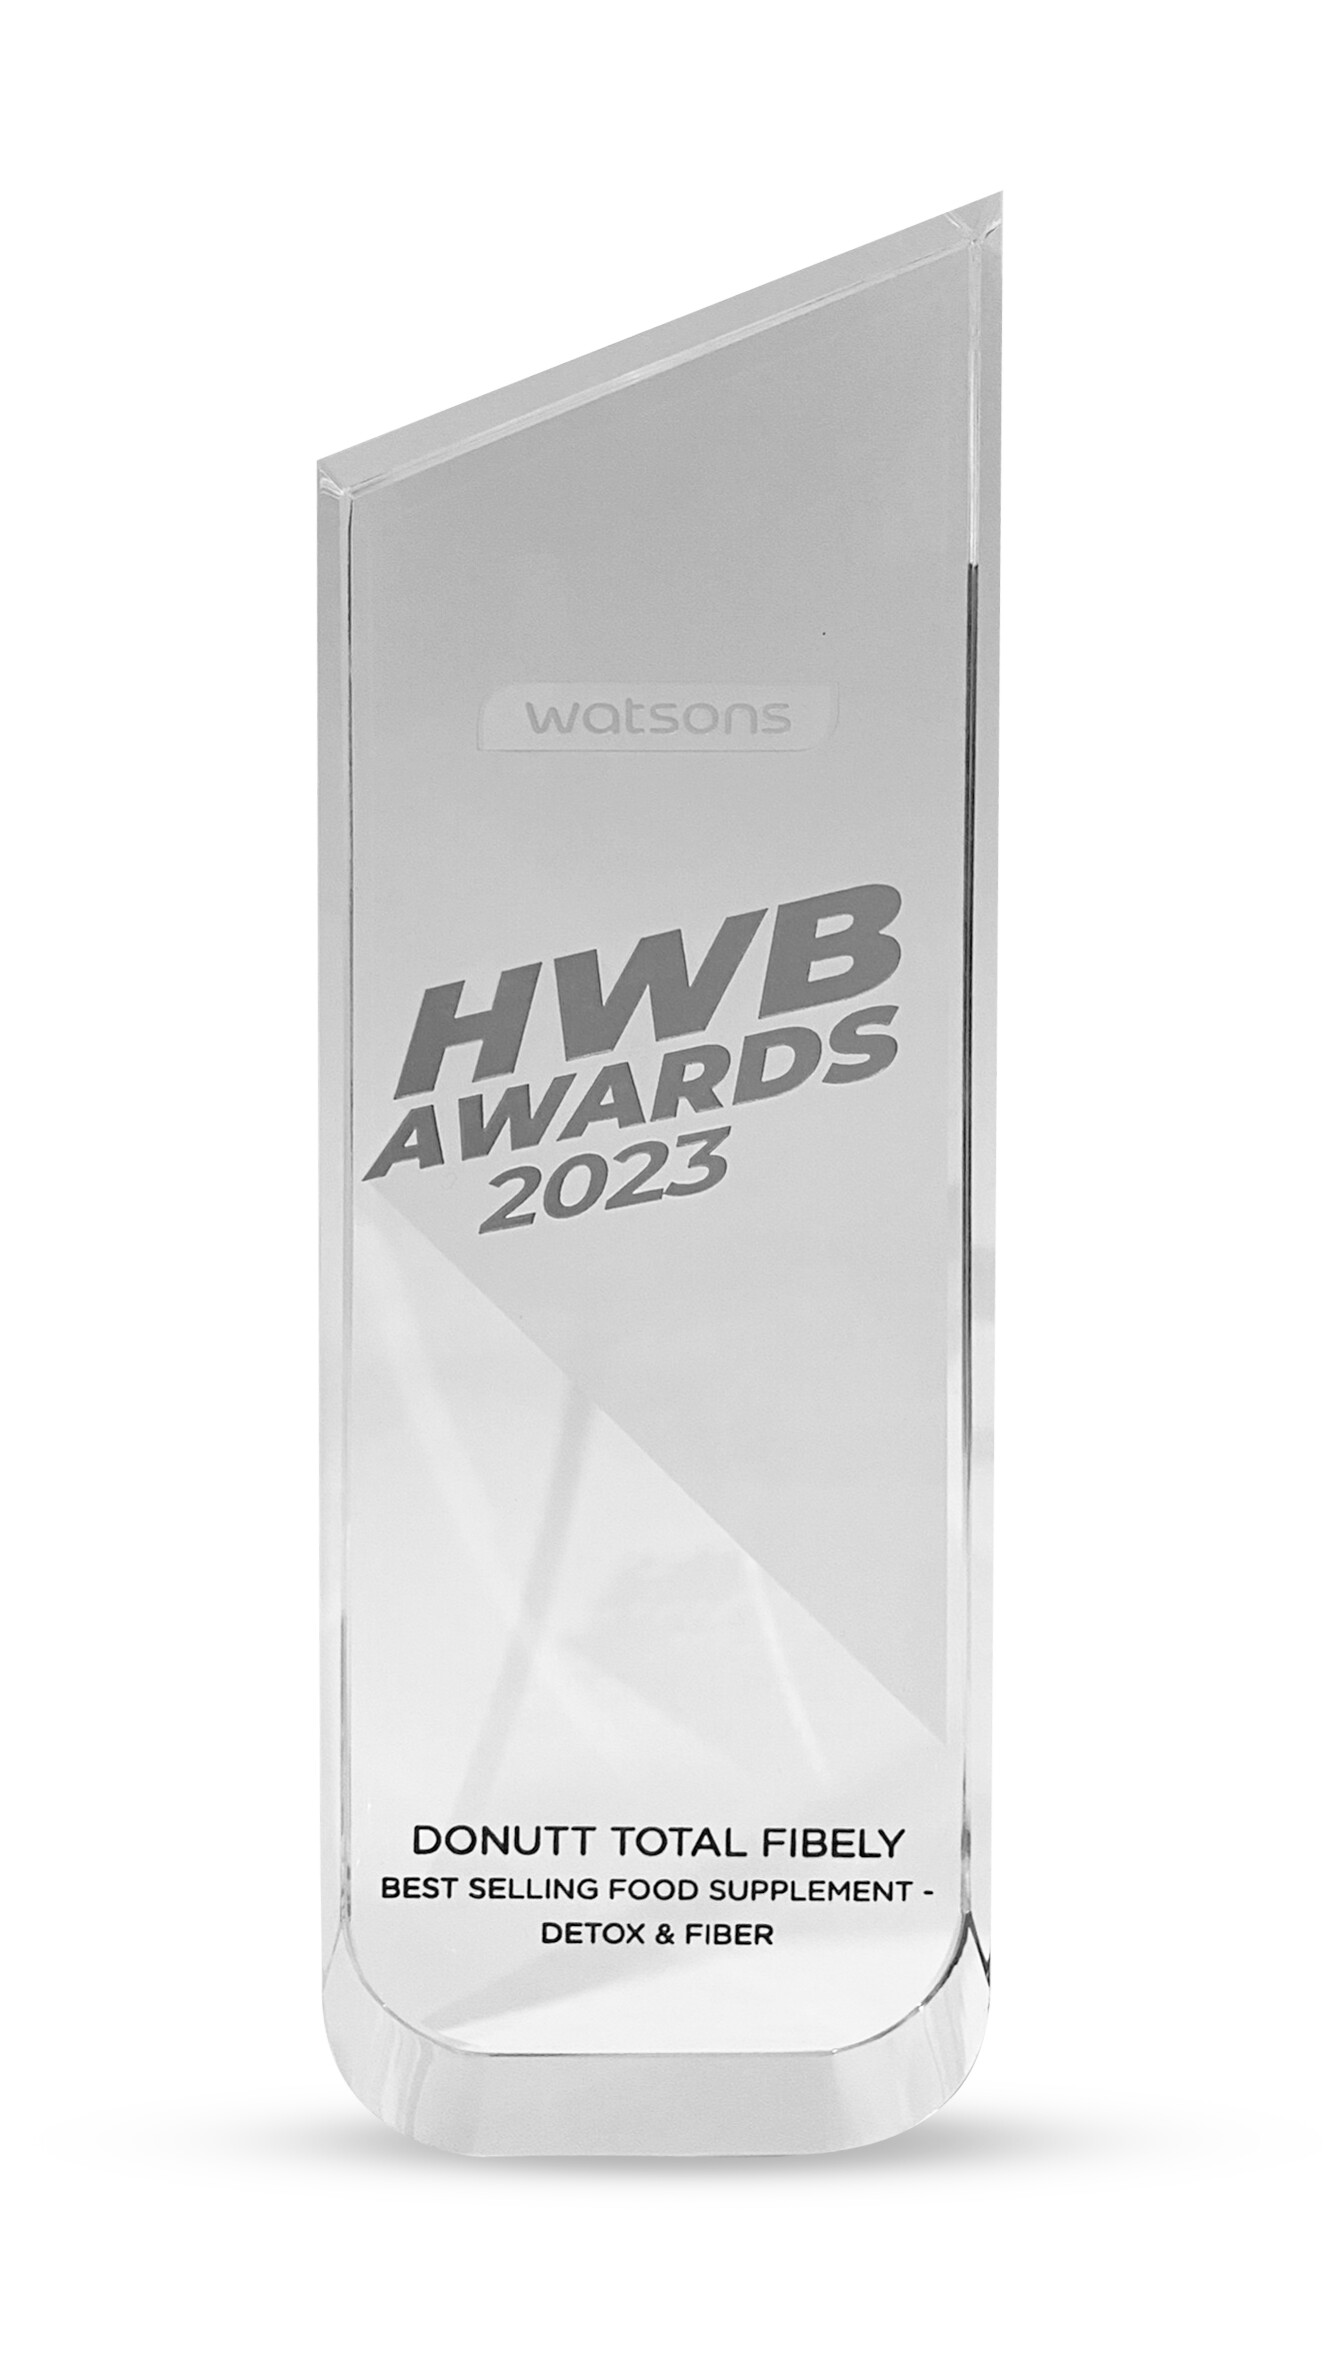 NOVA คว้ารางวัล Watsons HWB Awards 2023 สุดยอดสินค้าขายดีต่อเนื่อง 6 ปีซ้อน